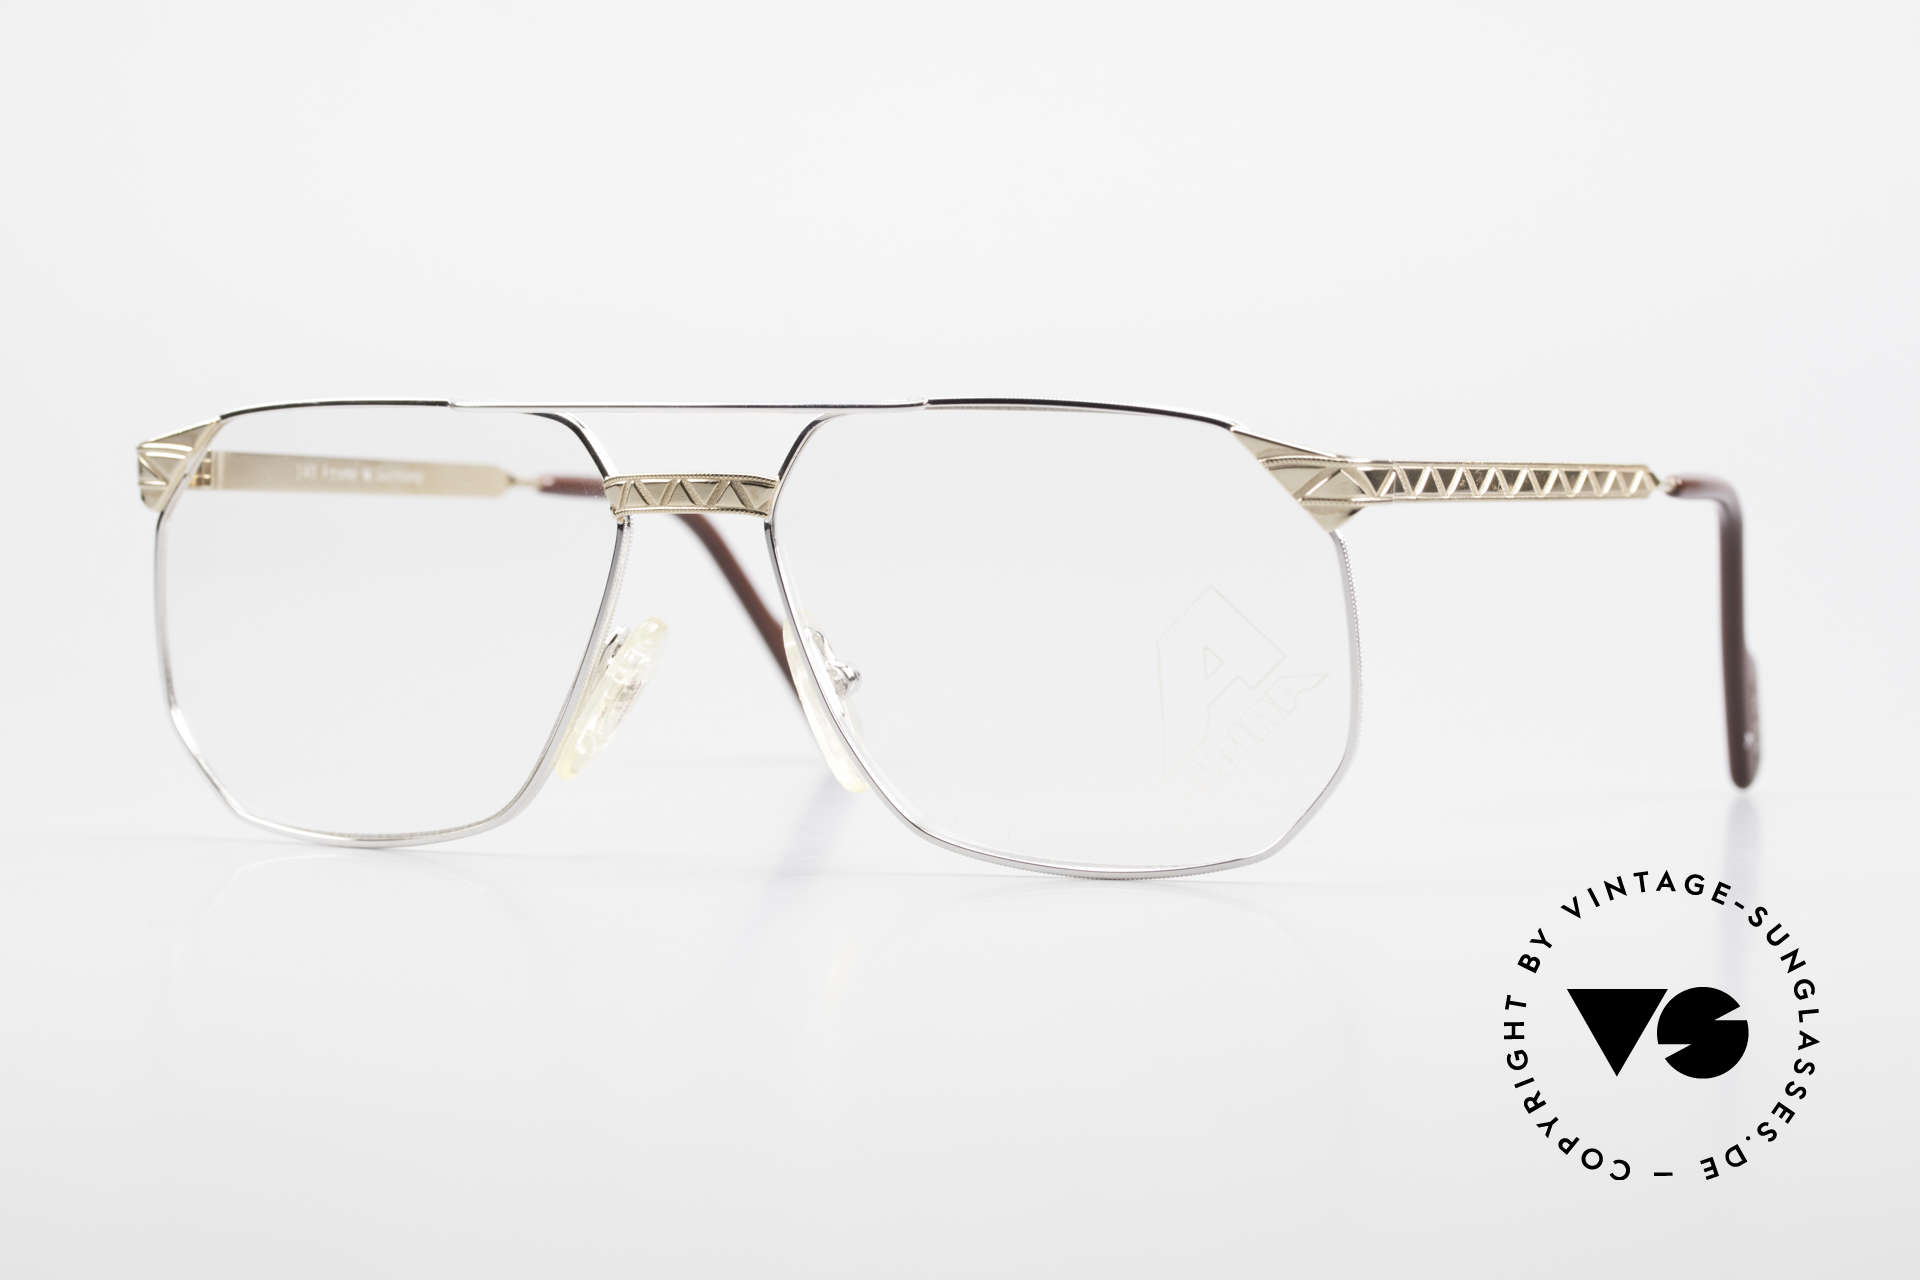 Alpina FM34 80's Designer Frame No Retro, Alpina premium vintage eyeglasses from 1988/89, Made for Men